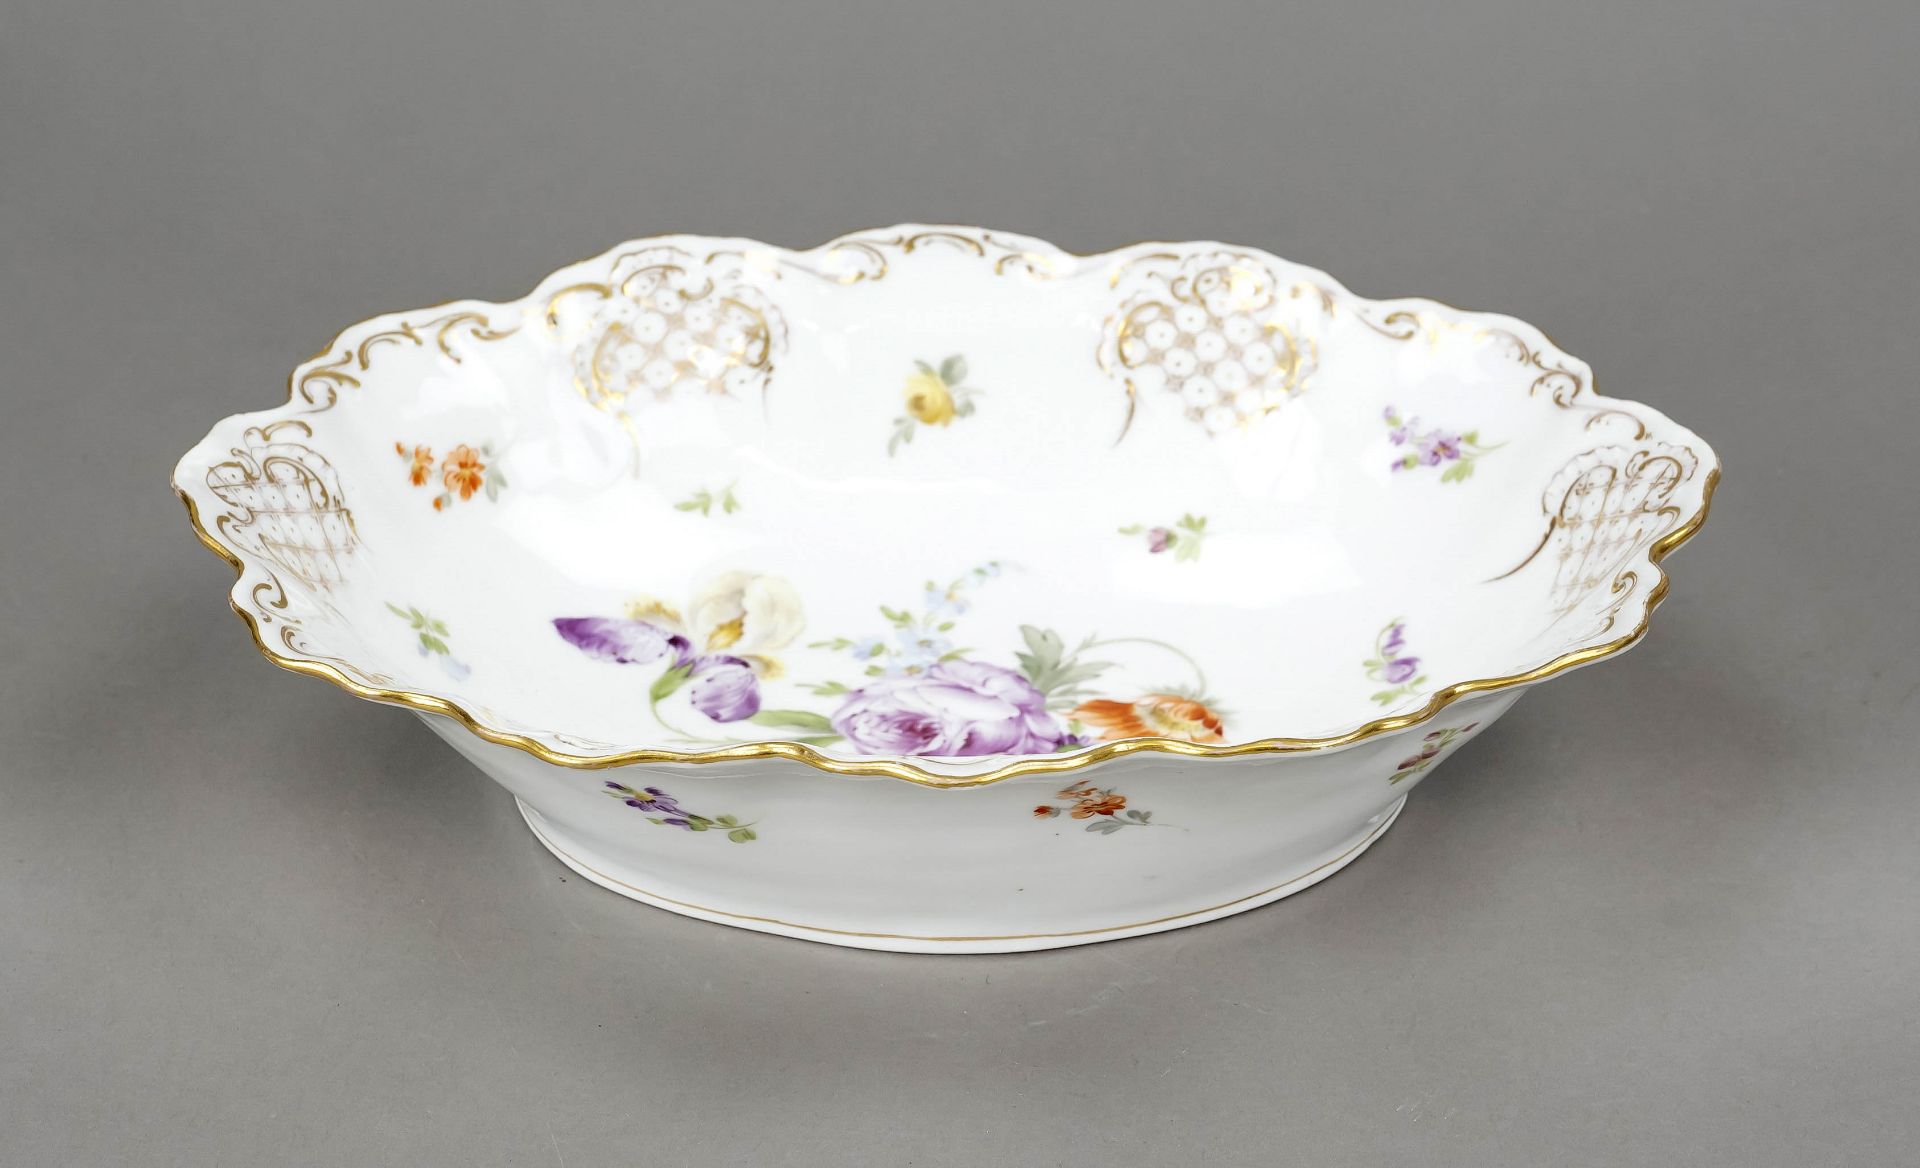 Oval decorative bowl, Richard Klemm, Dresden, Marek 1888-1918, polychrome flower painting with